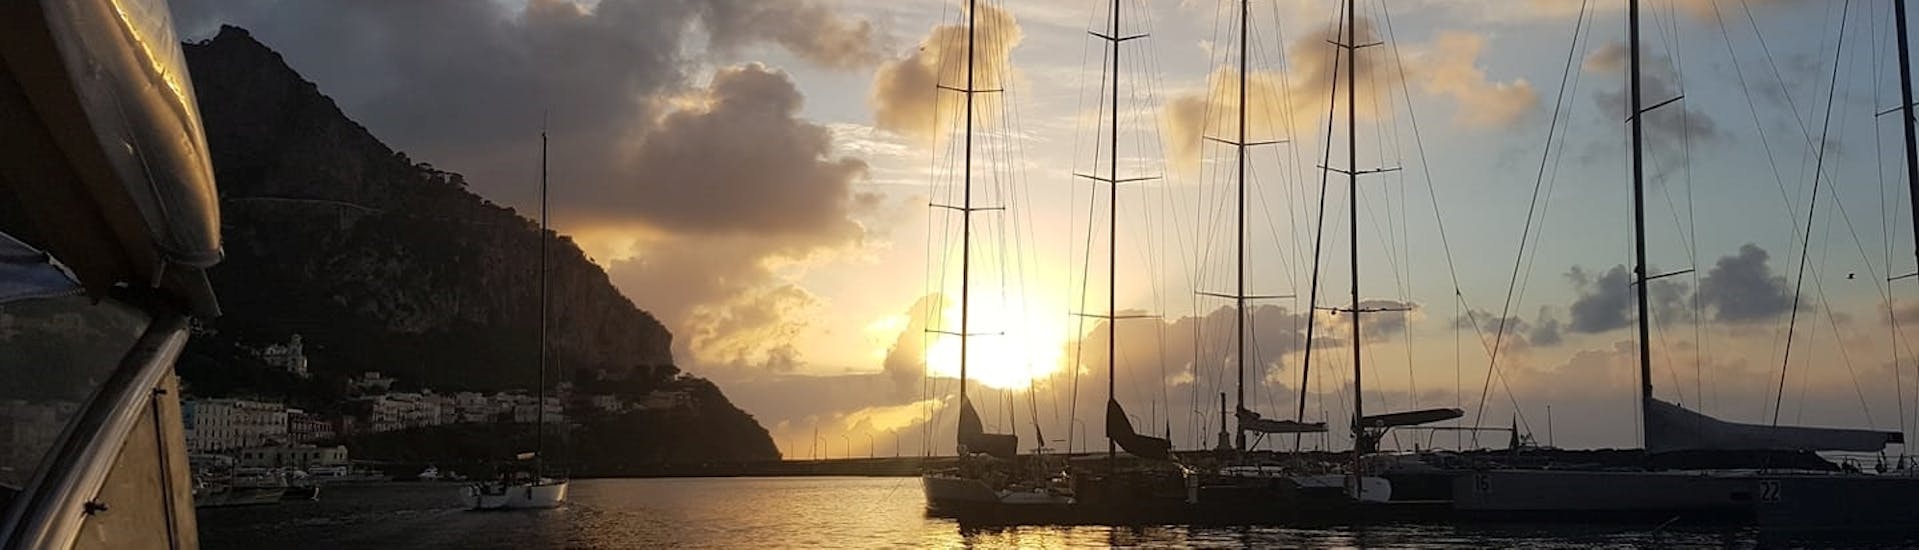 Private Bootstour von Sorrento nach Capri bei Sonnenuntergang.